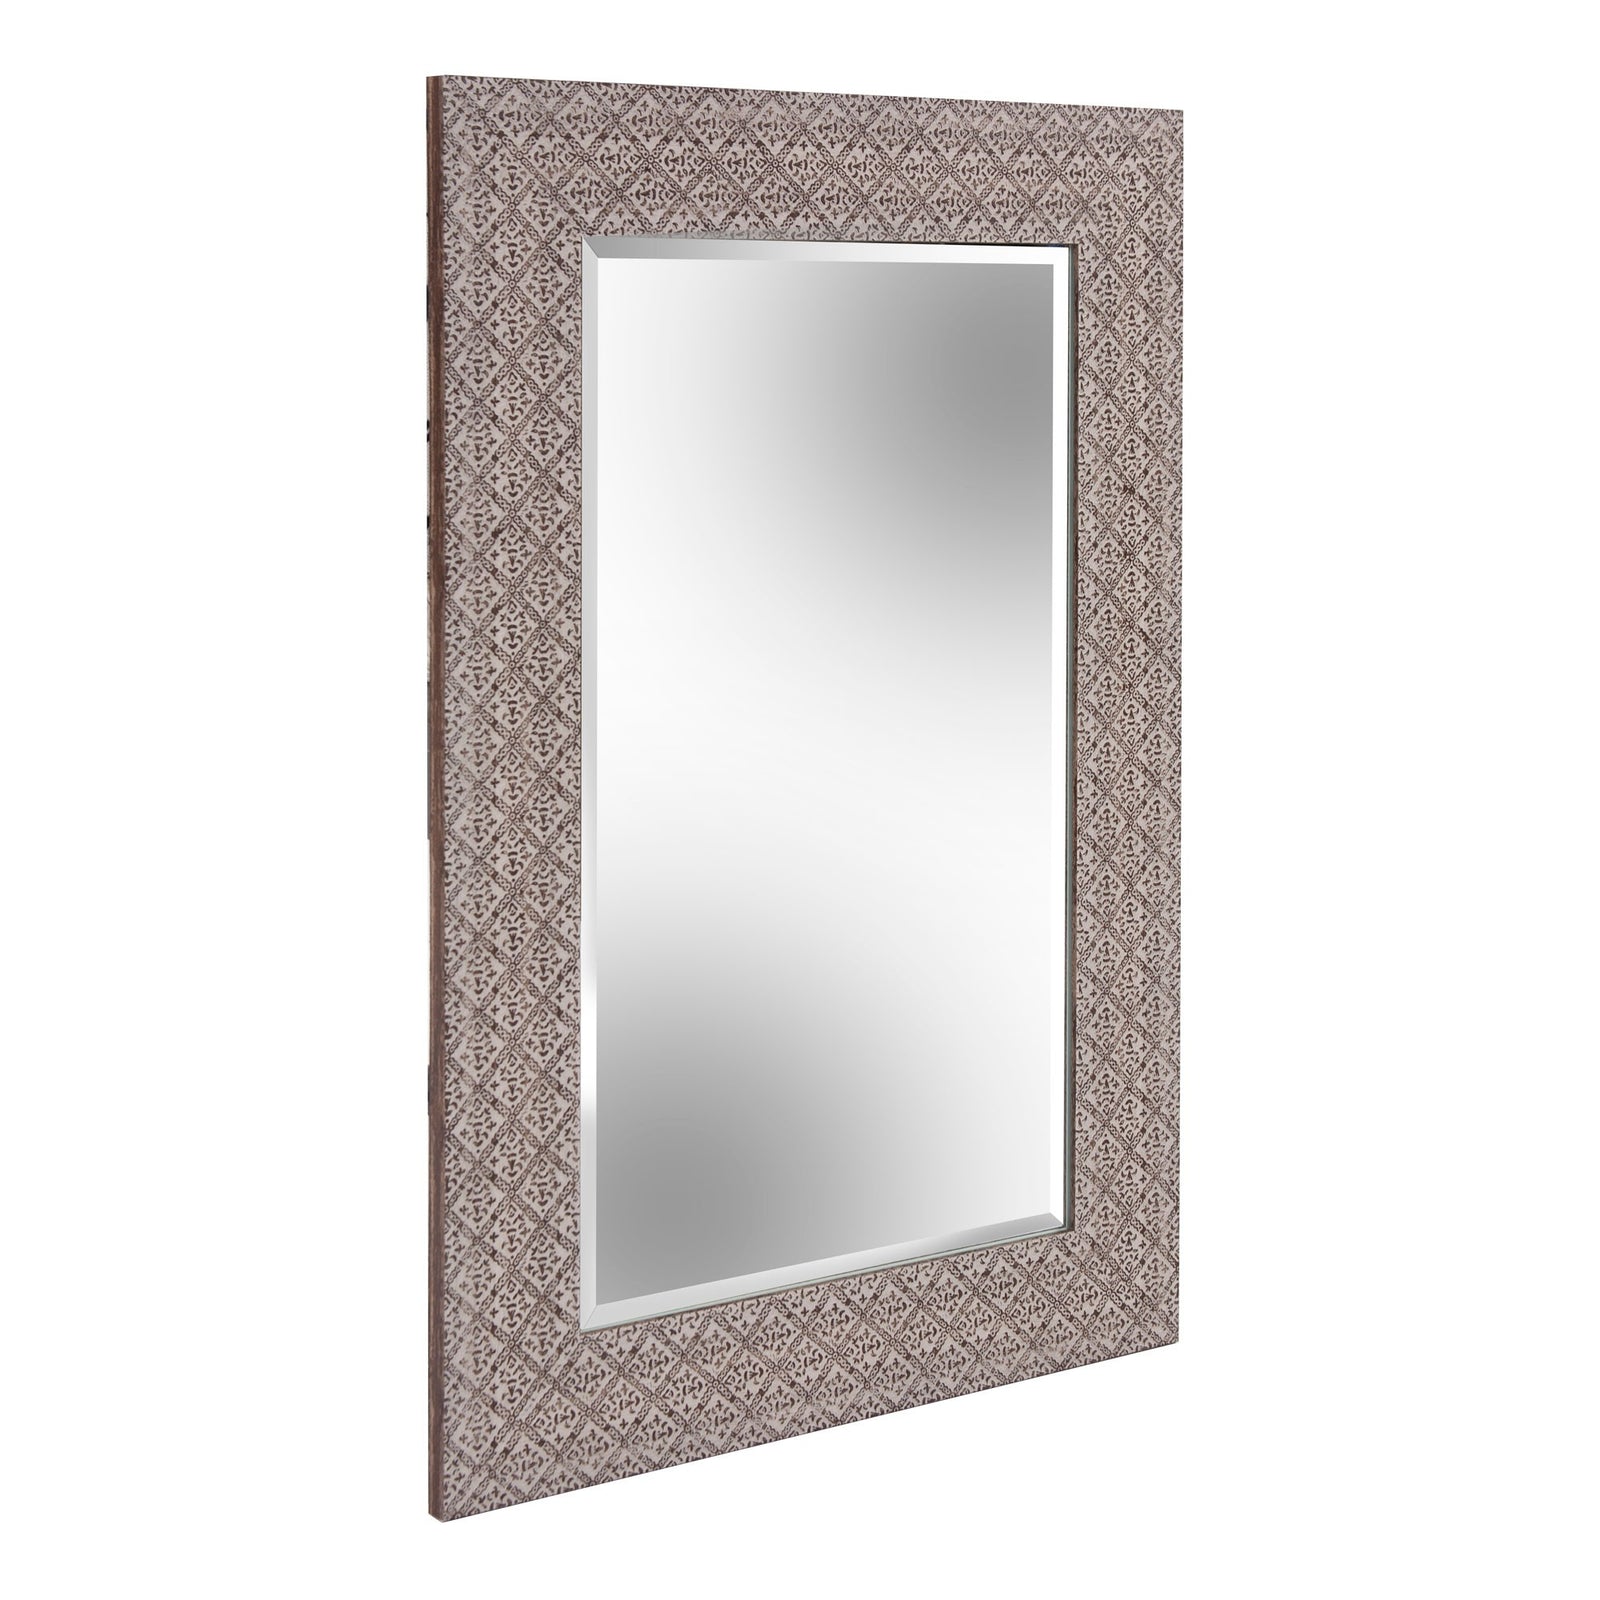 Gray Embossed Faux Wood Rectangular Mirror